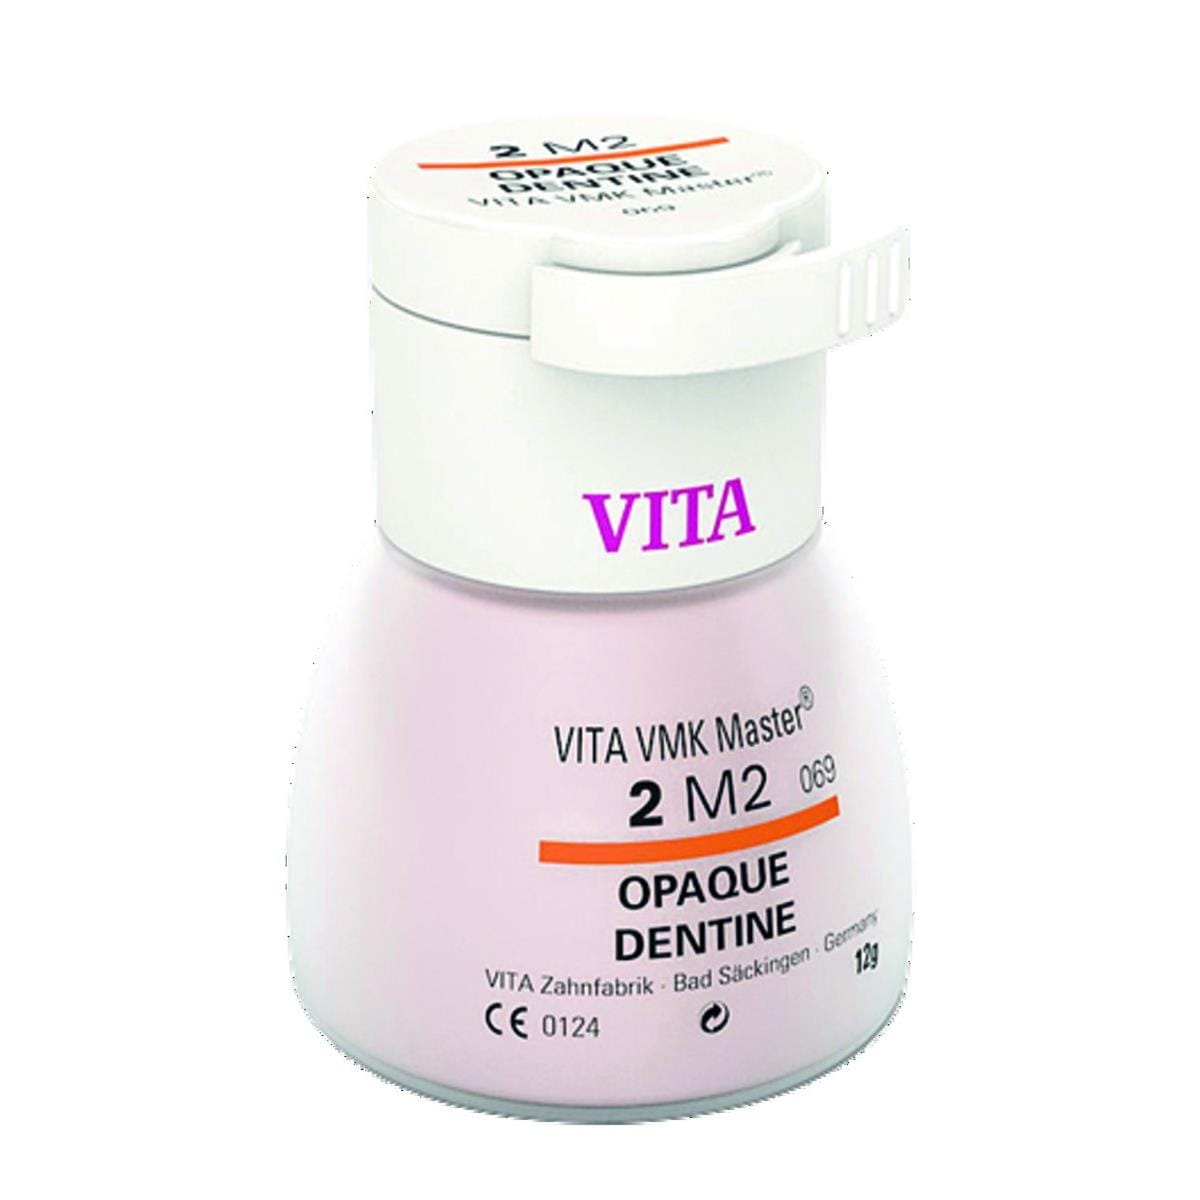 VMK Master VITA - Dentine Opaque - 5M1 - Le flacon de 12 g